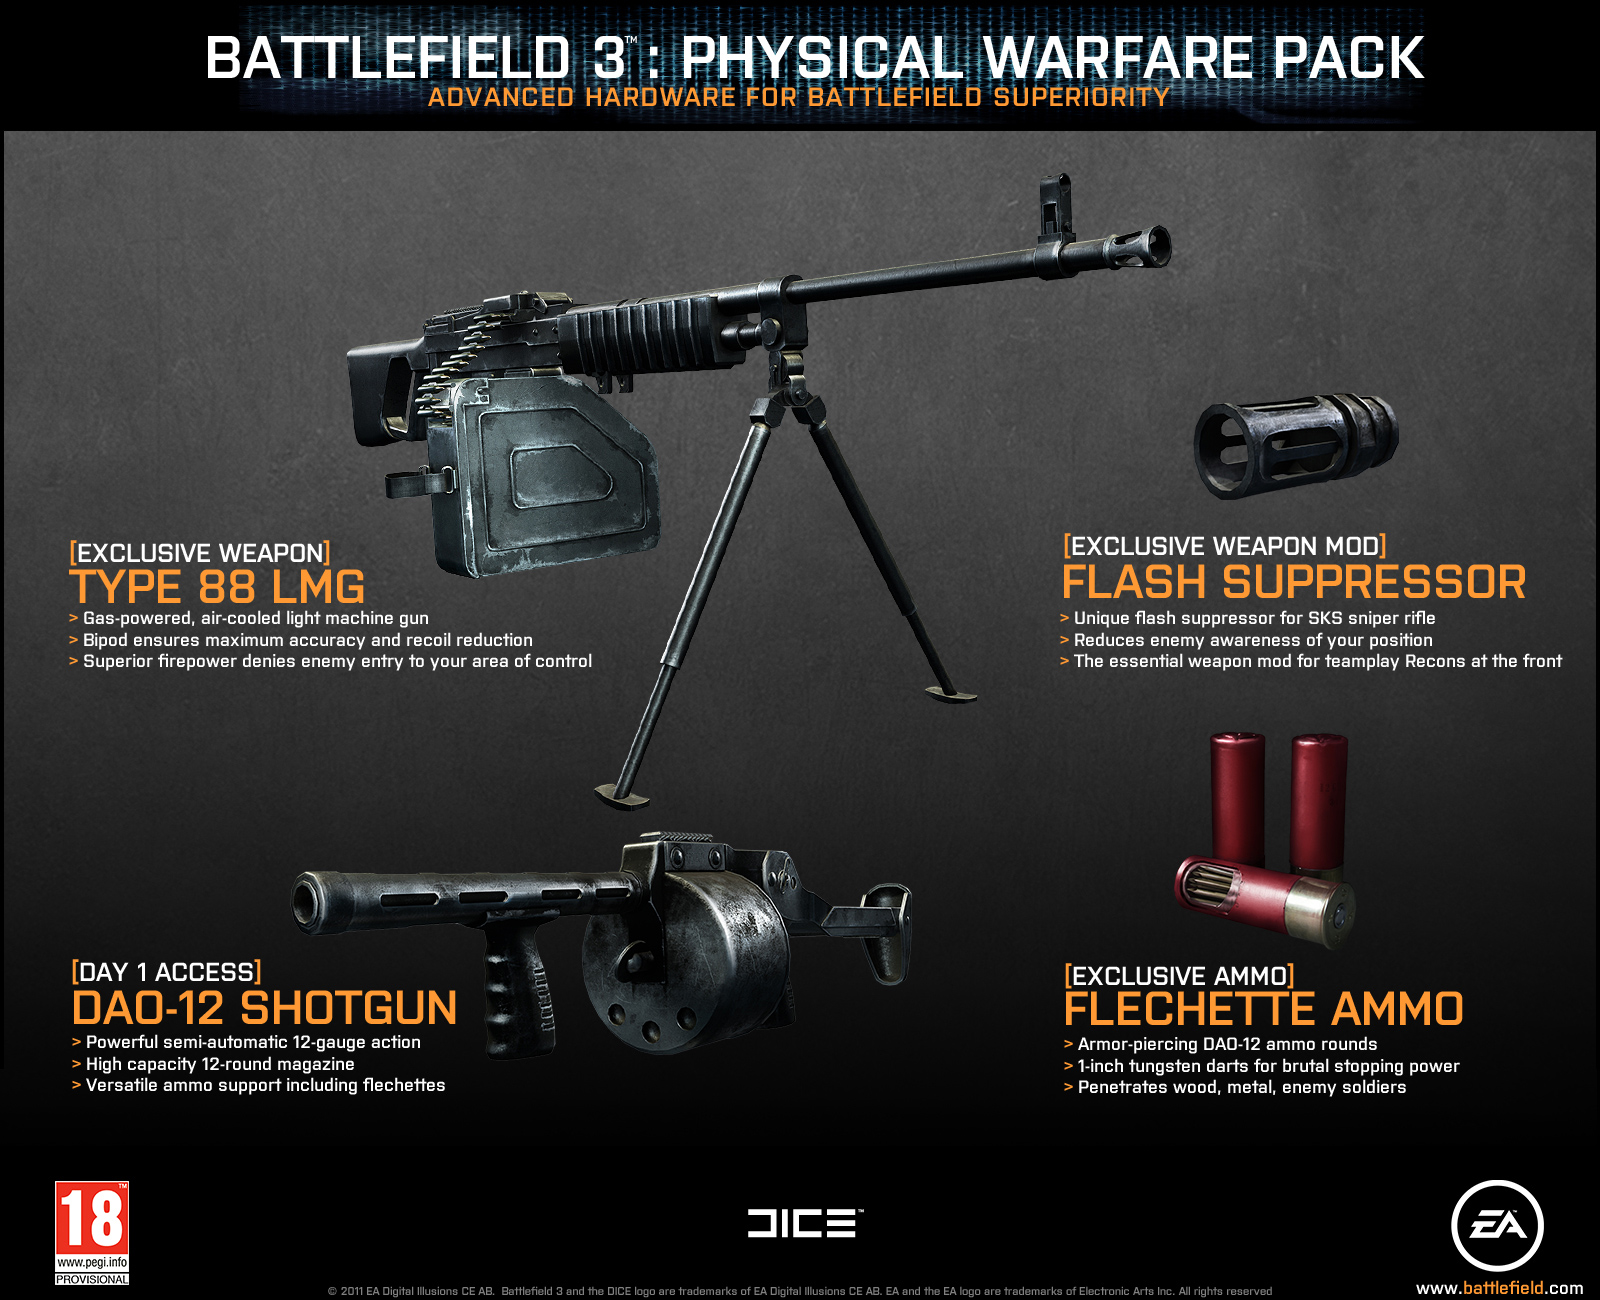  Physical Warfare Pack